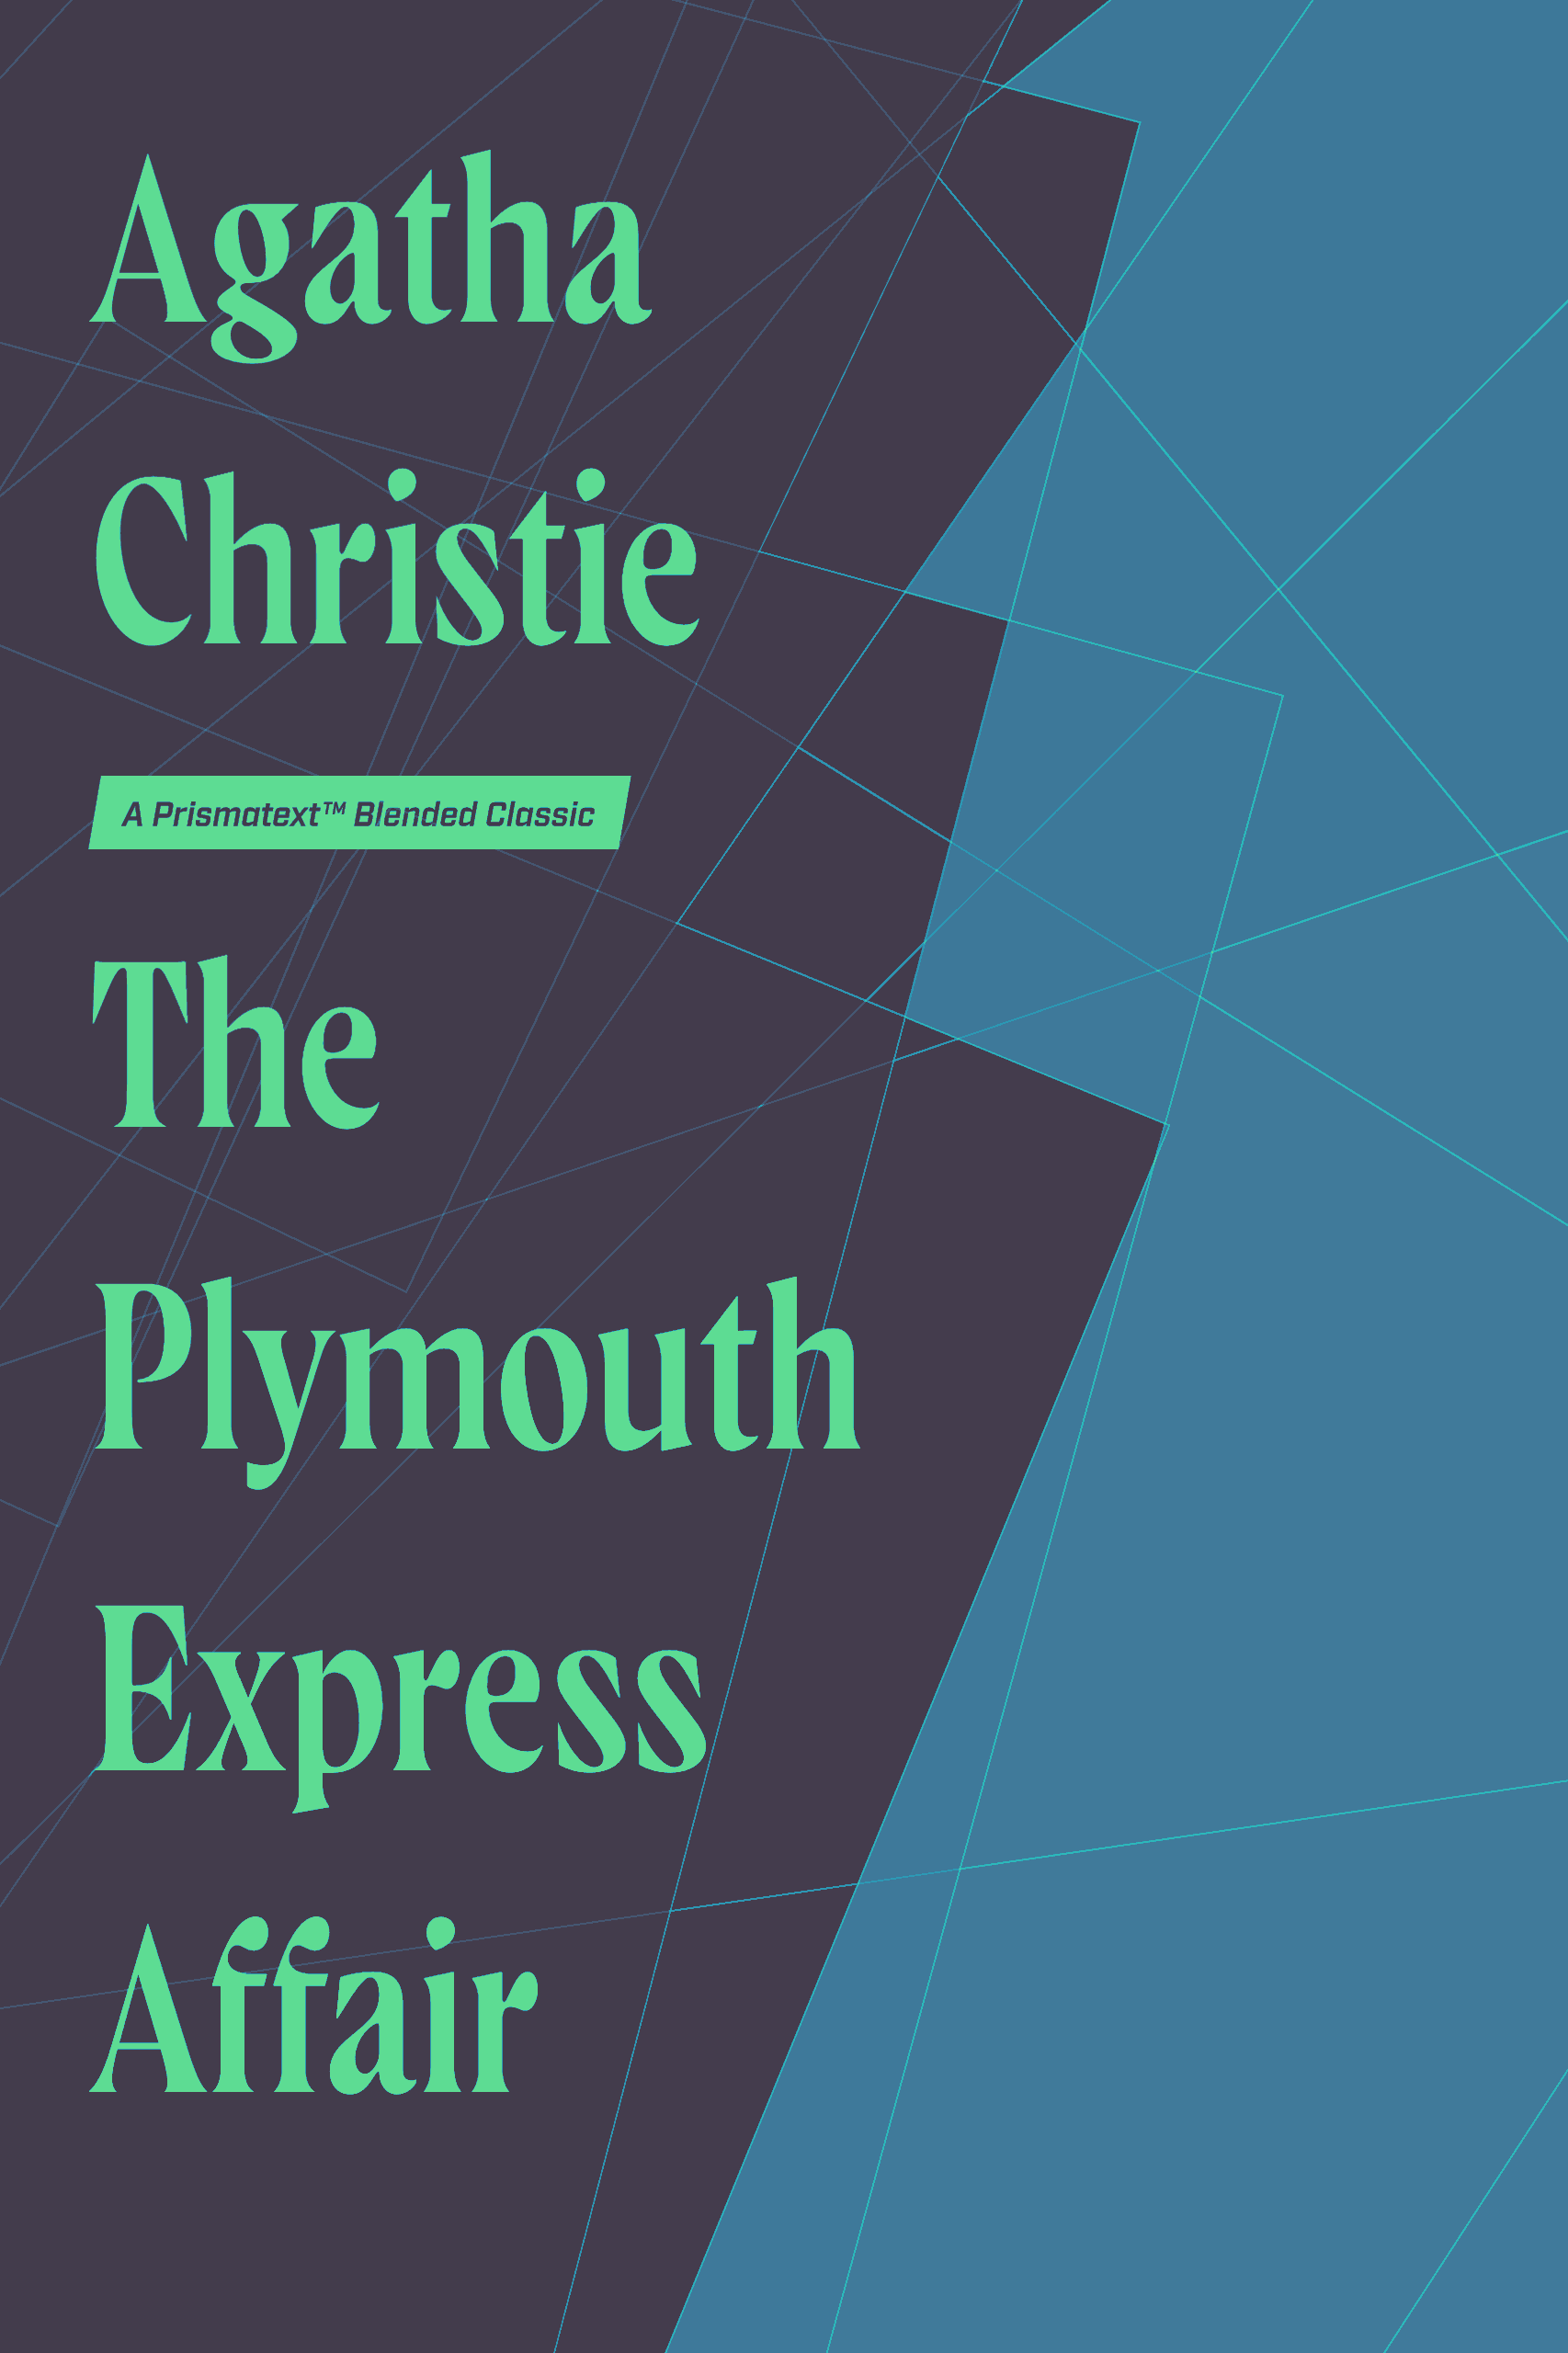 The Plymouth Express Affair by Agatha Christie